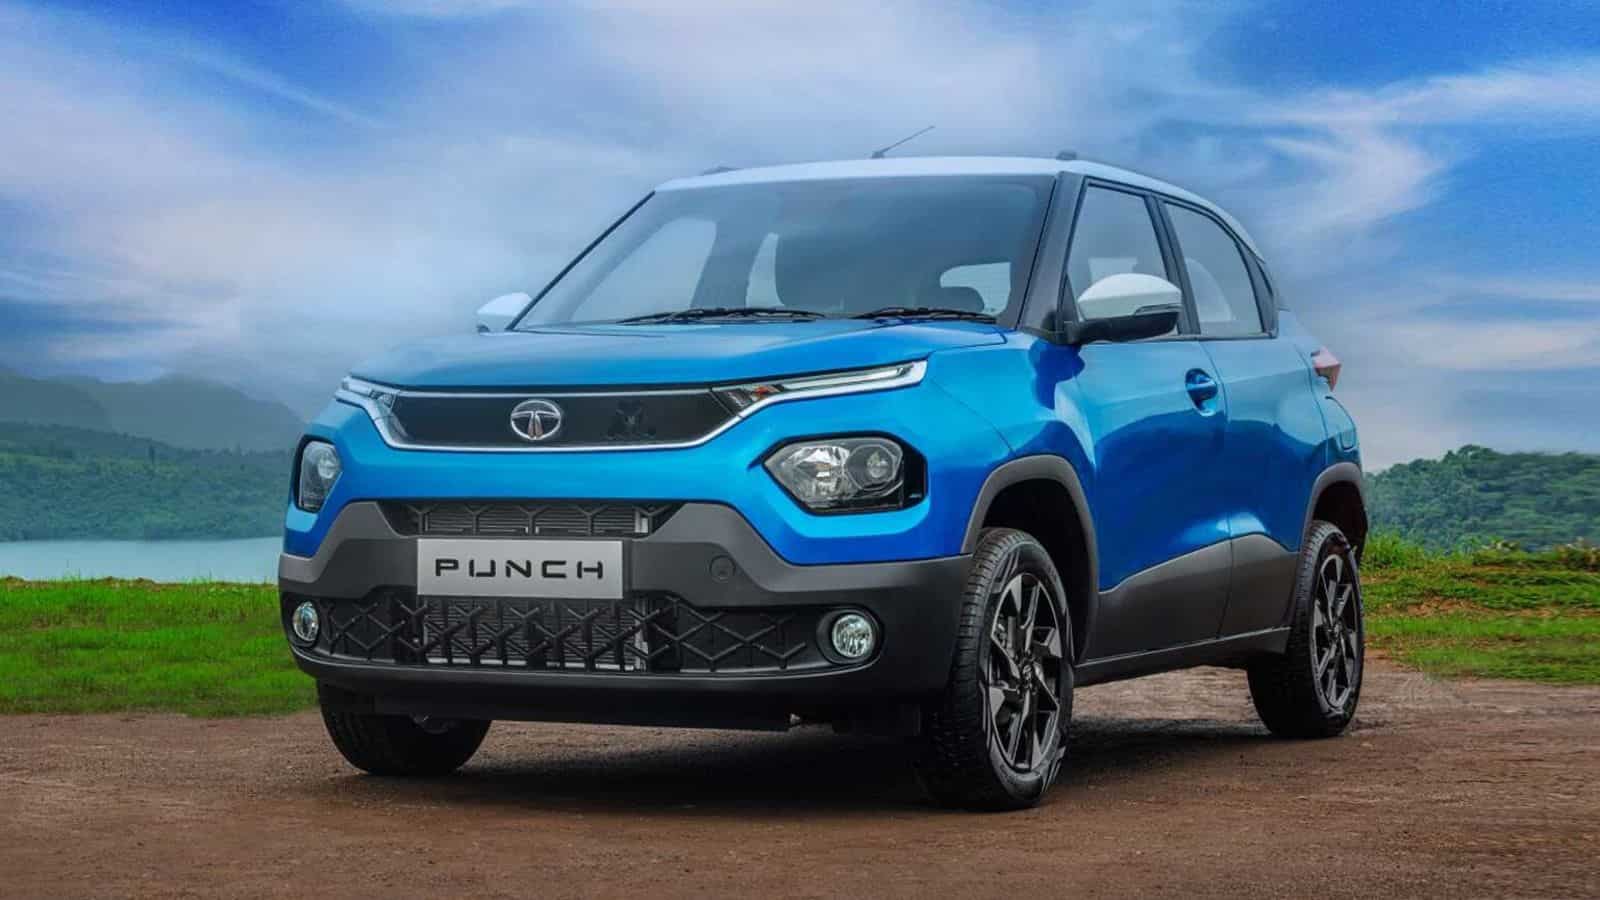 Tata Punch micro SUV launch soon: Company reveals interiors, exteriors. See pics